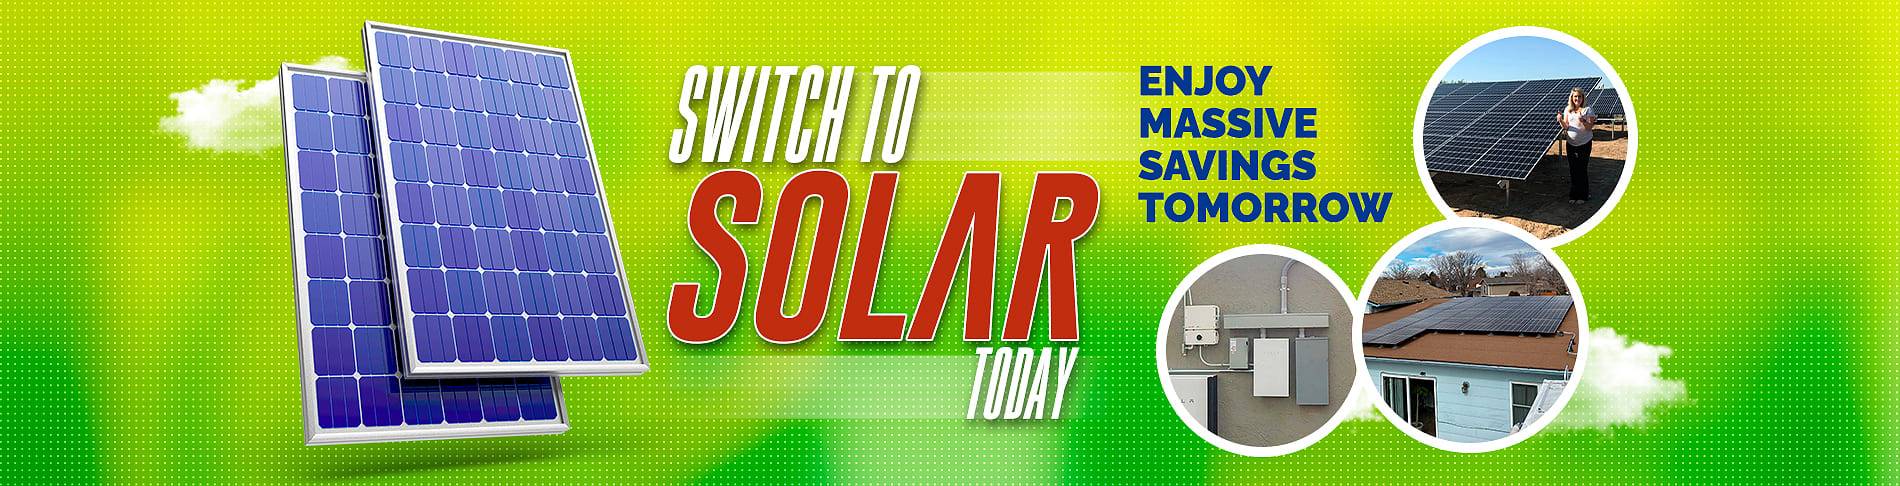 switch to solar today enjoy massive savings tomorrow